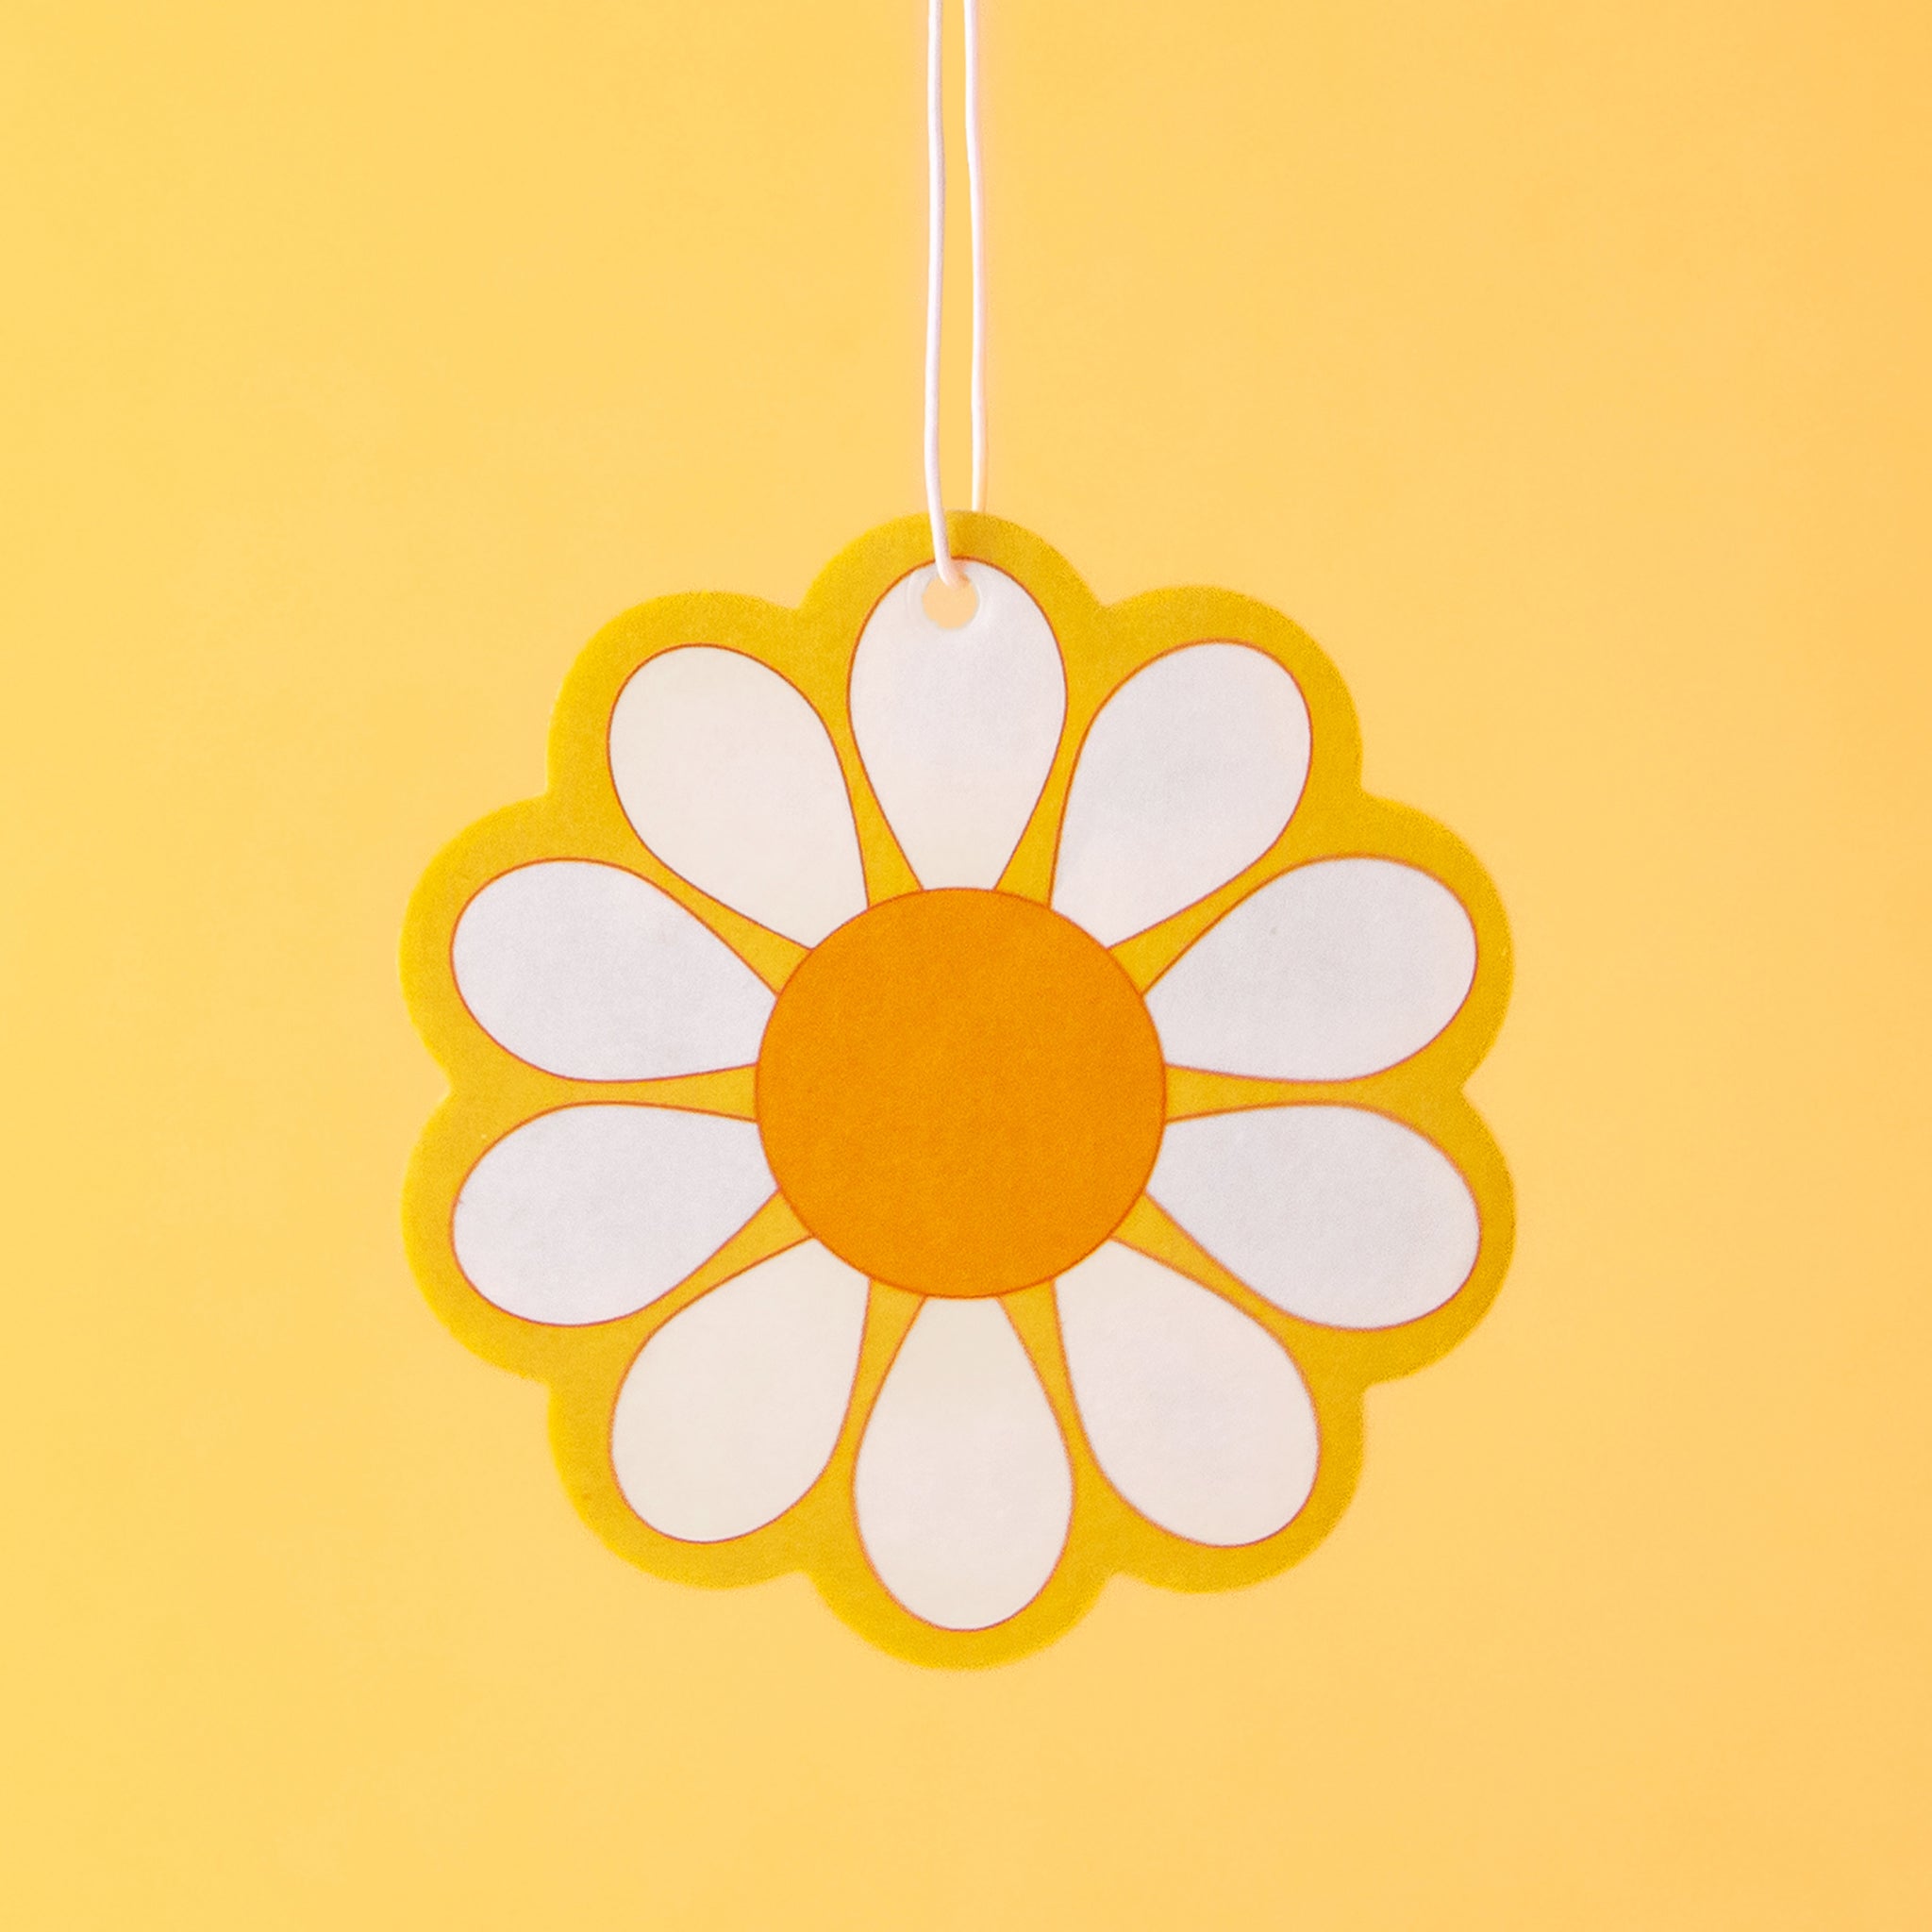 A yellow, white and orange daisy shaped air freshener.